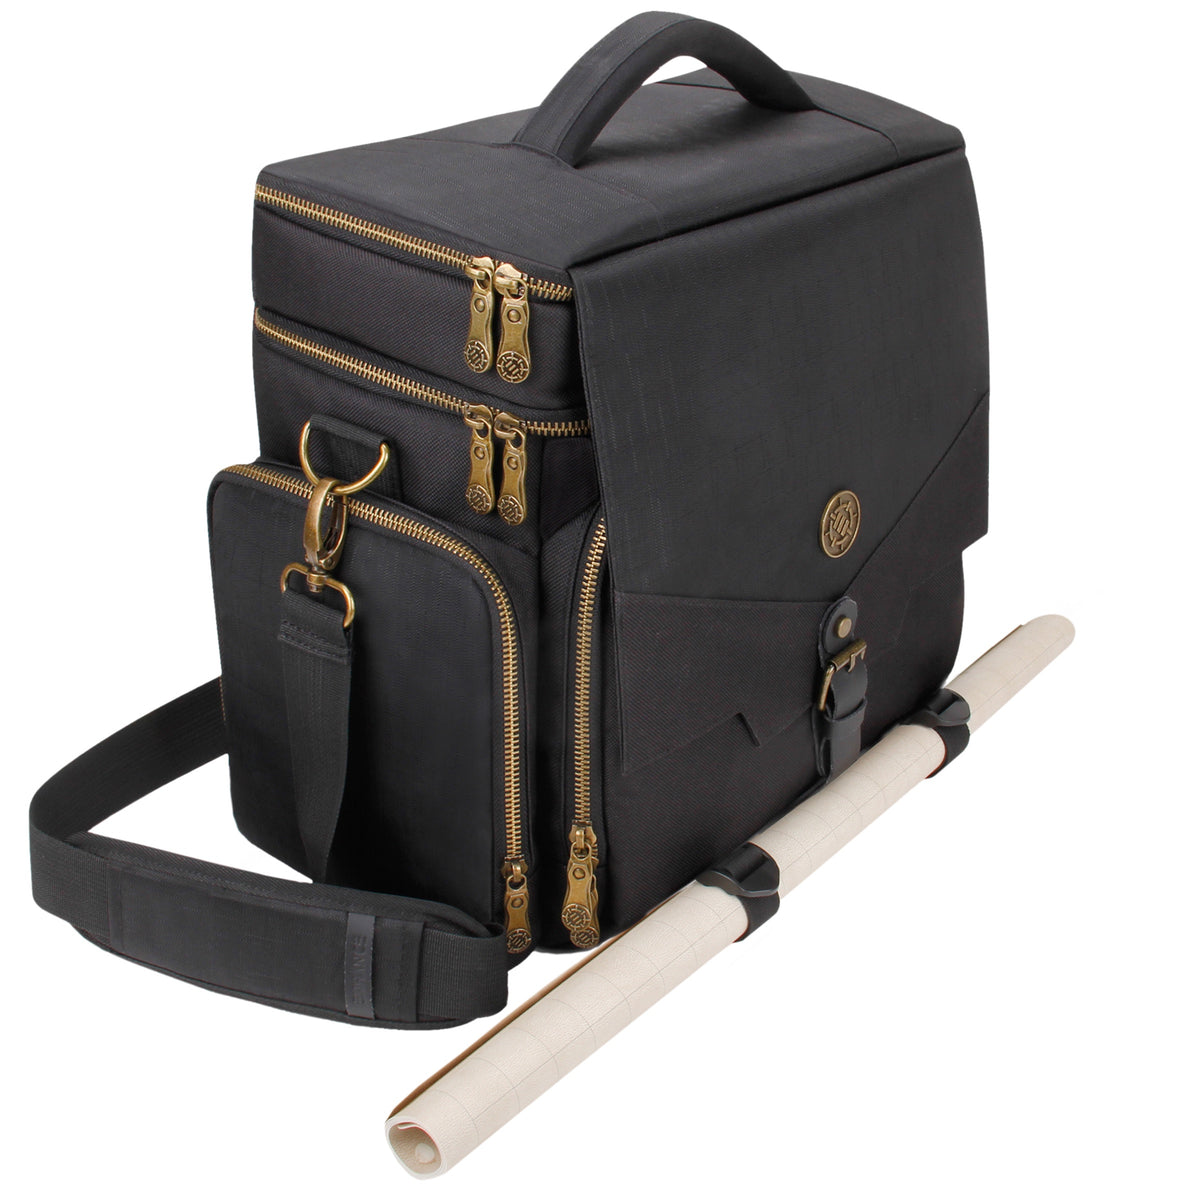 Enhance Edition Adventurers Travel Bag Black